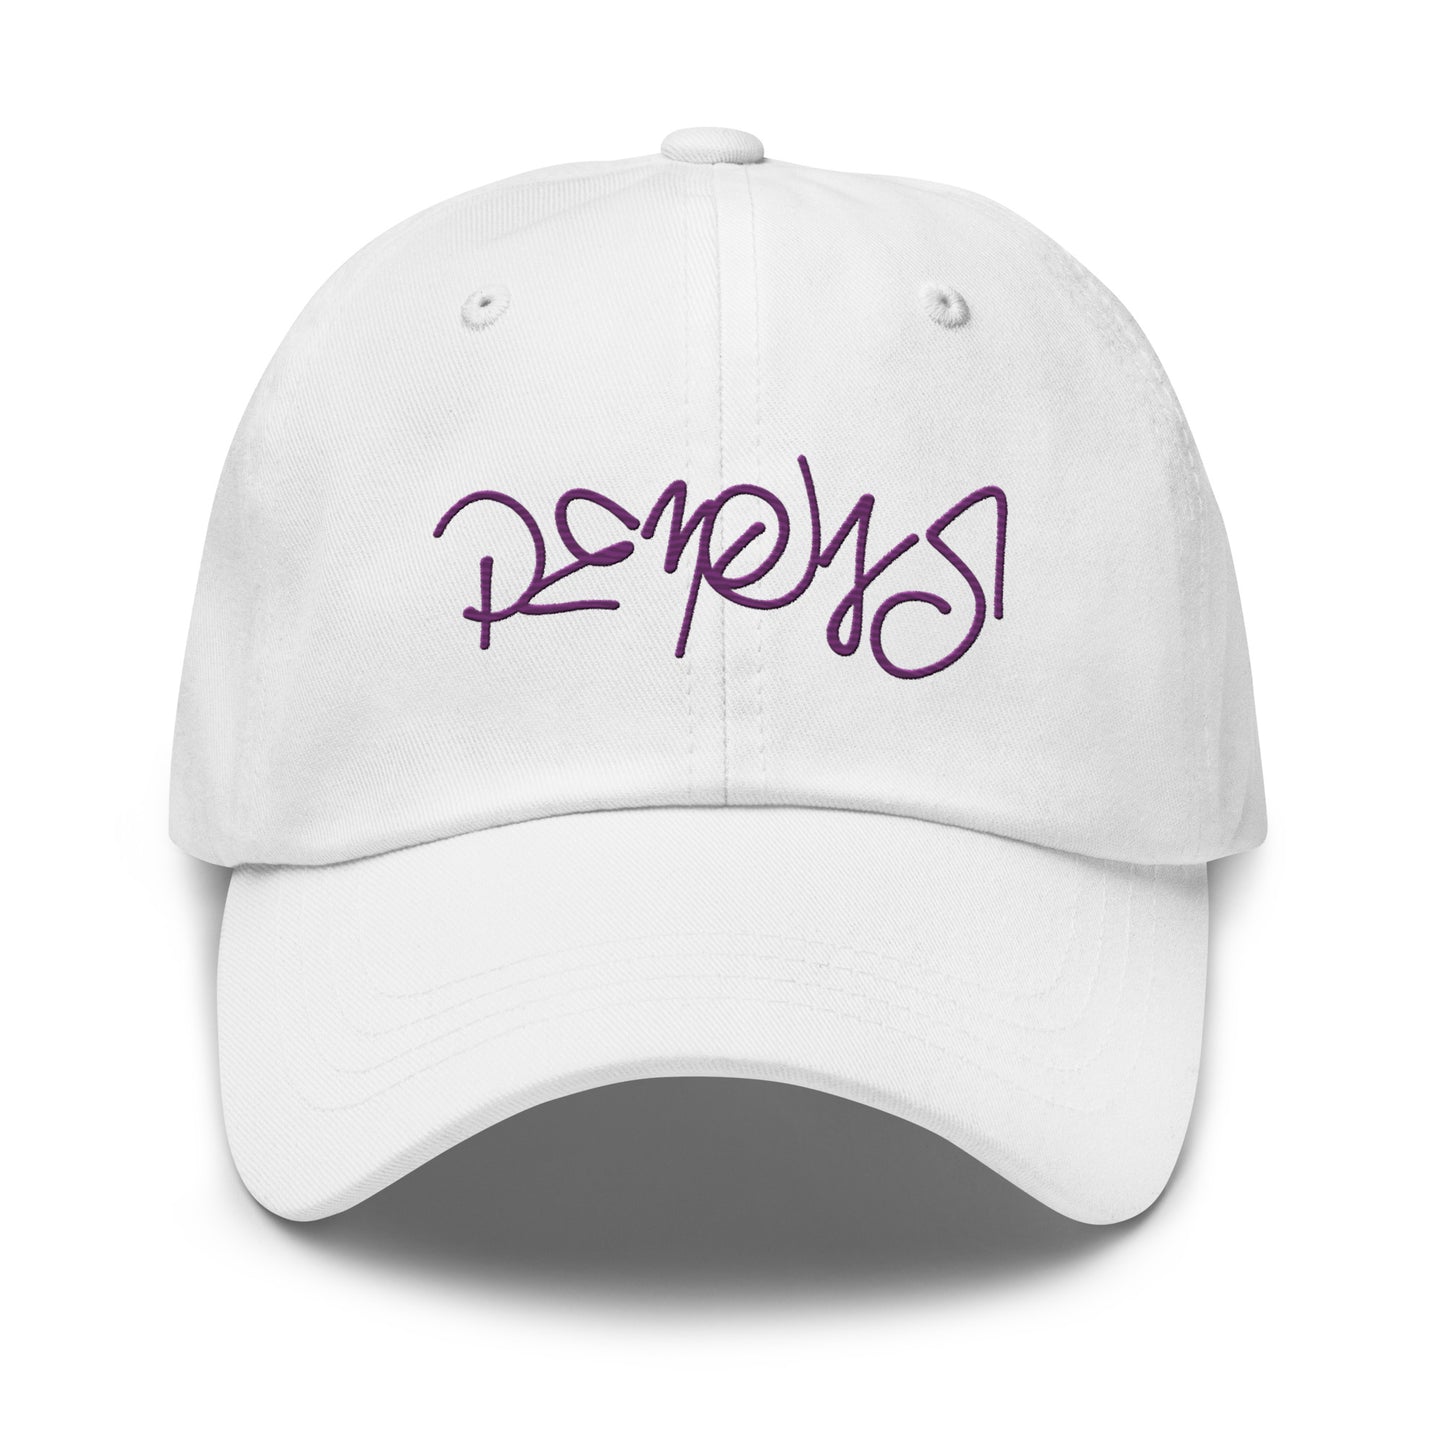 "Demons" Hat